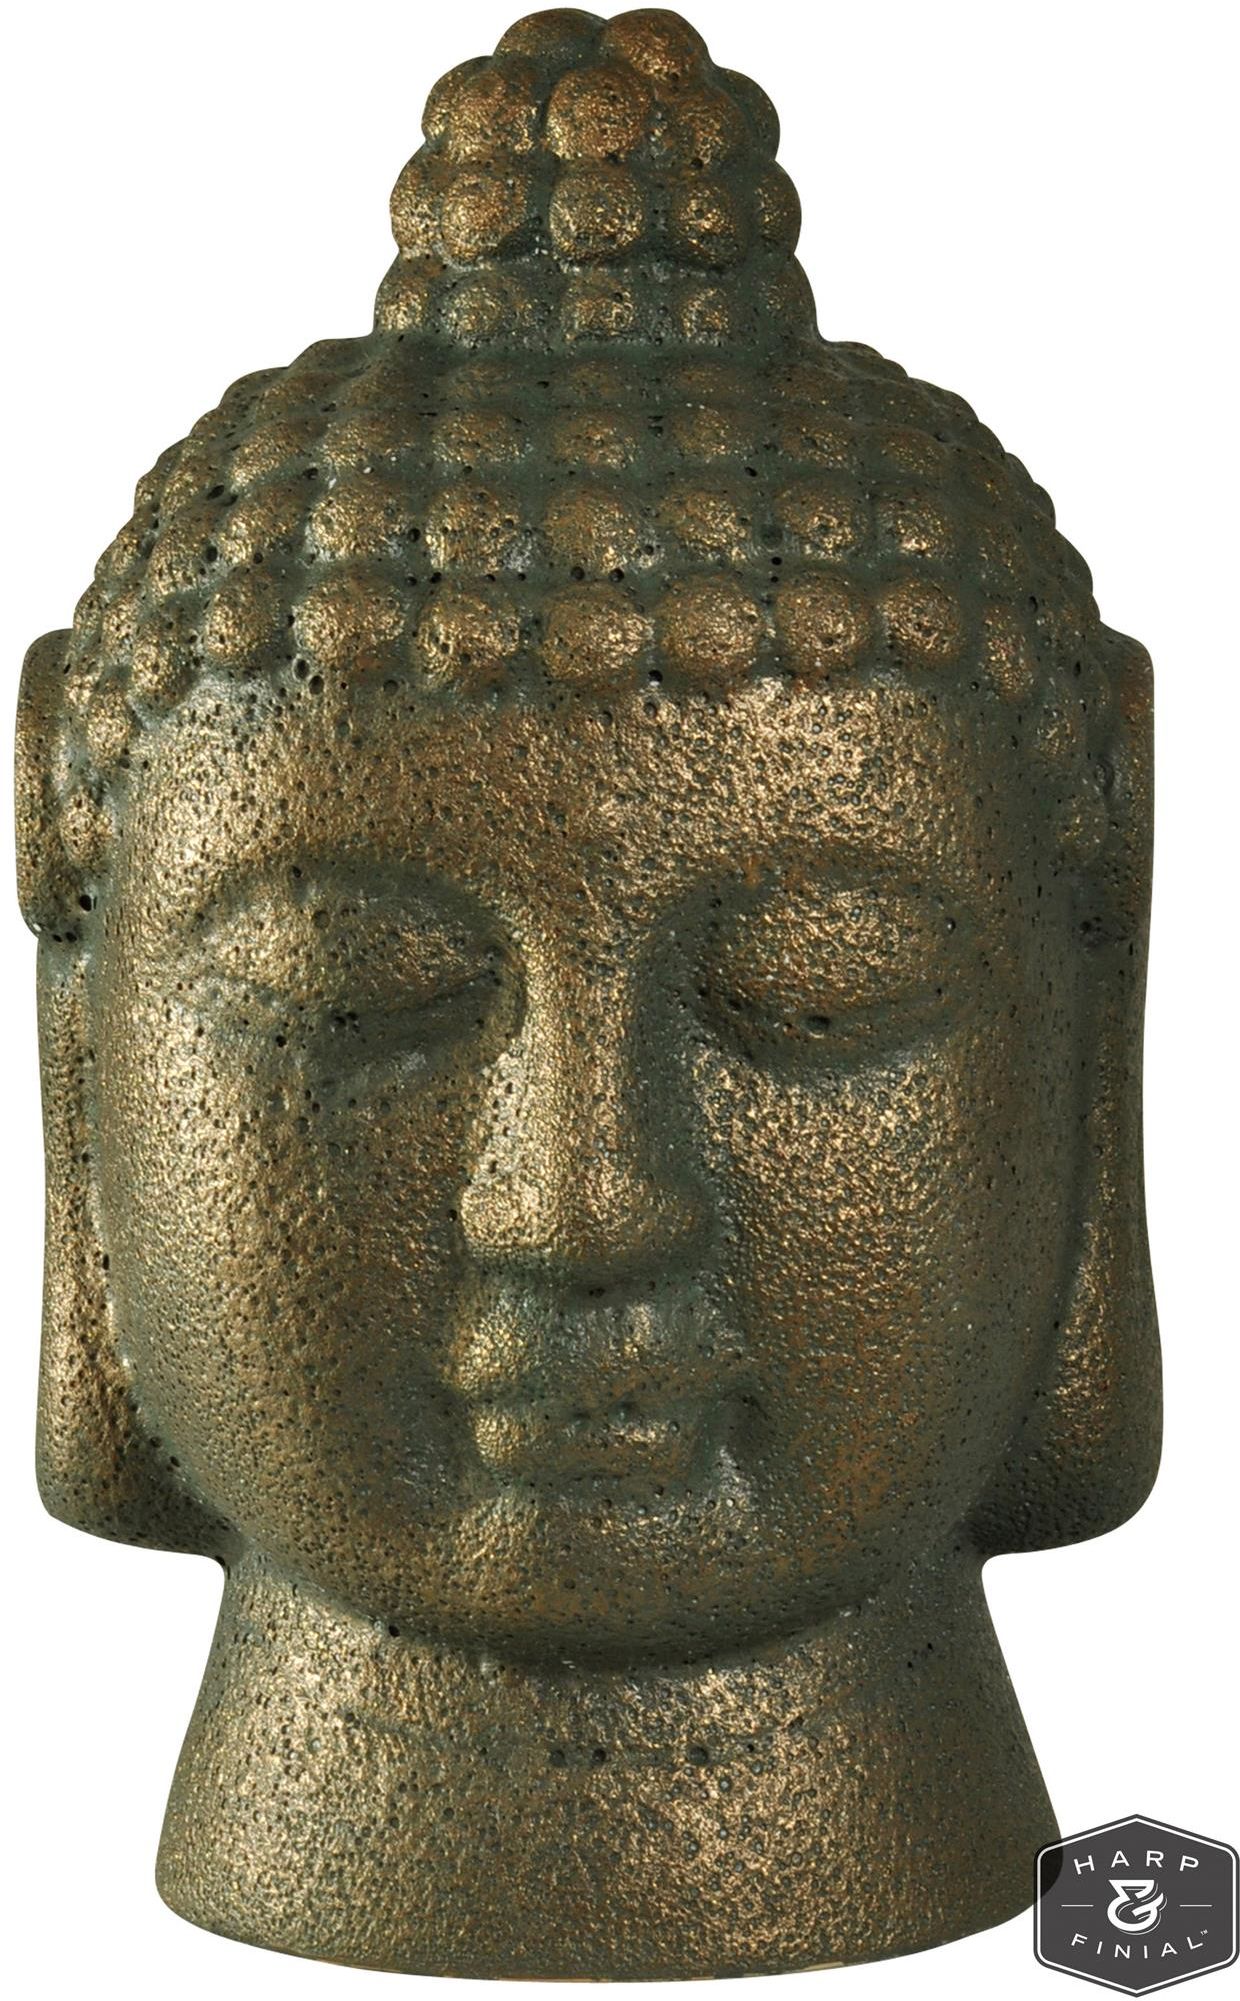 Harp & Finial® Tibet Buddha Head Statue